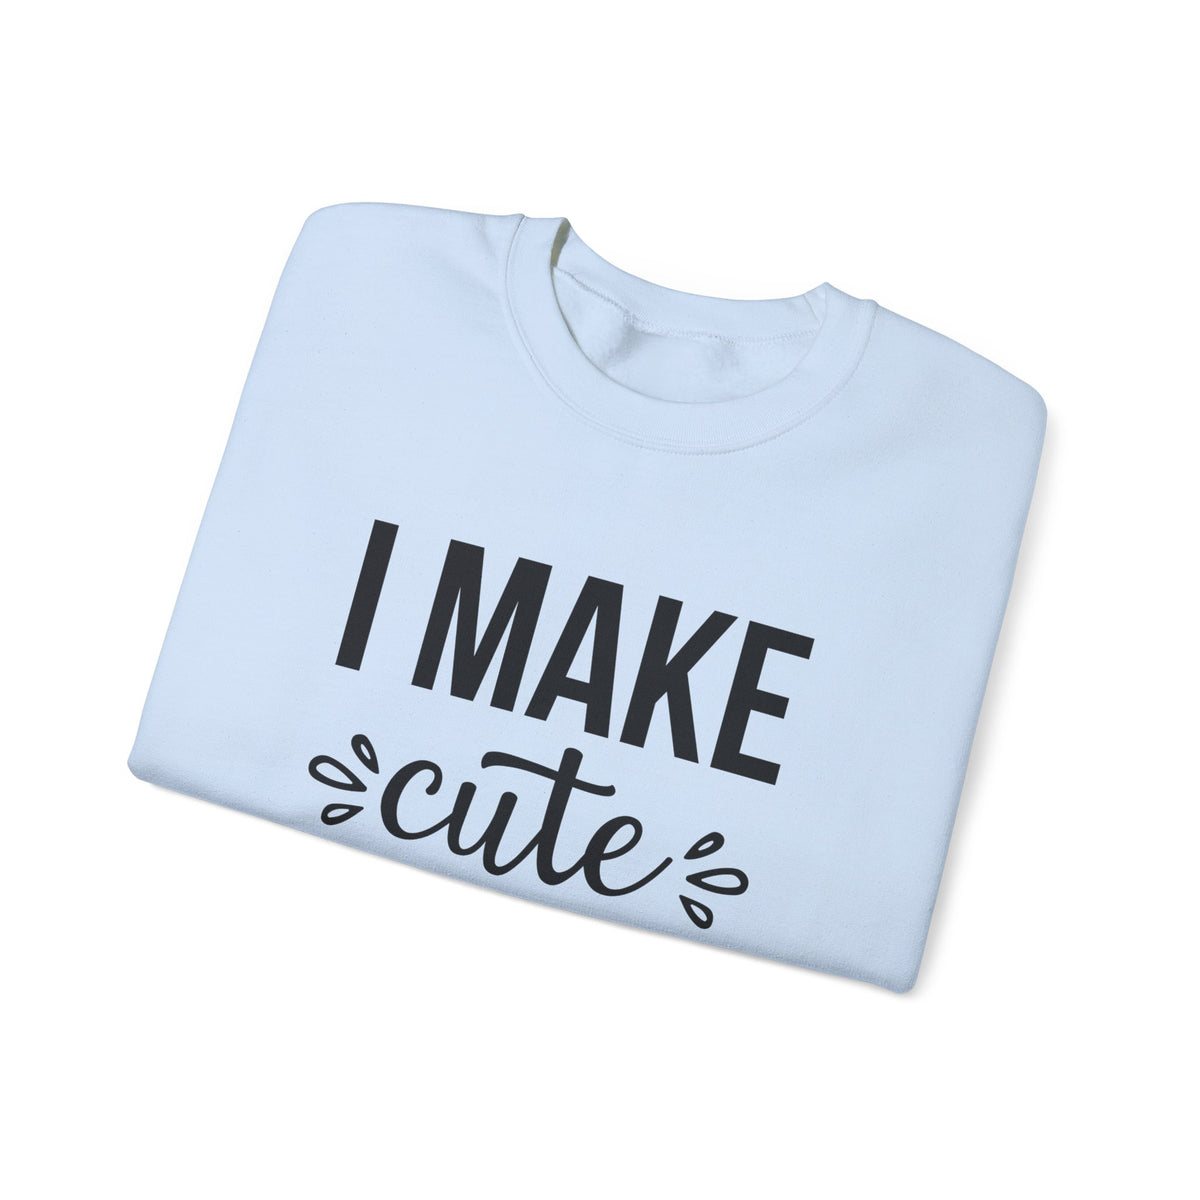 I Make Cute Babies Mother's Day Shirt | Mom's Gift | Unisex Heavy Blend Crewneck Sweatshirt